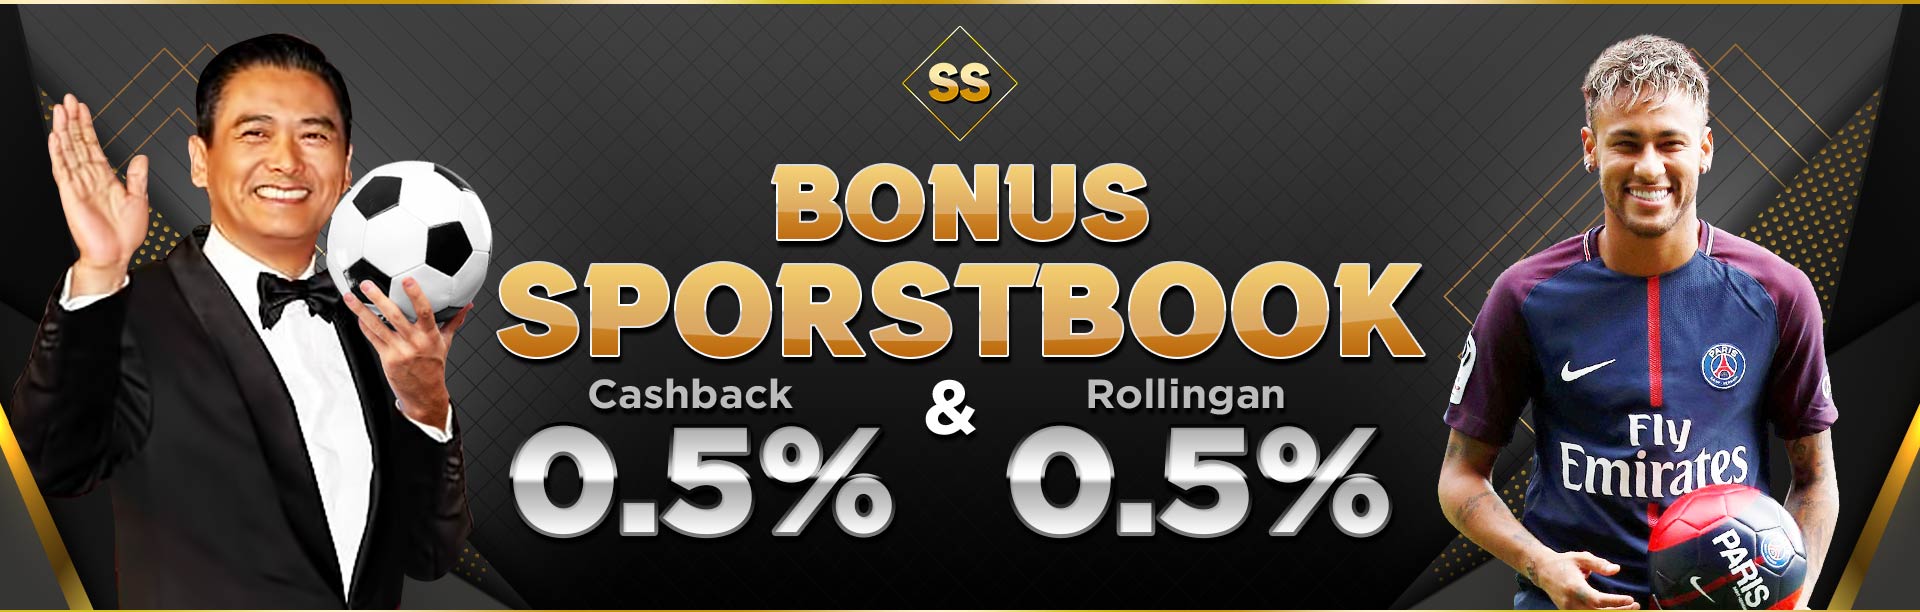 Bonus SPORTSBOOK Cashback 5% dan Rollingan 0,5%